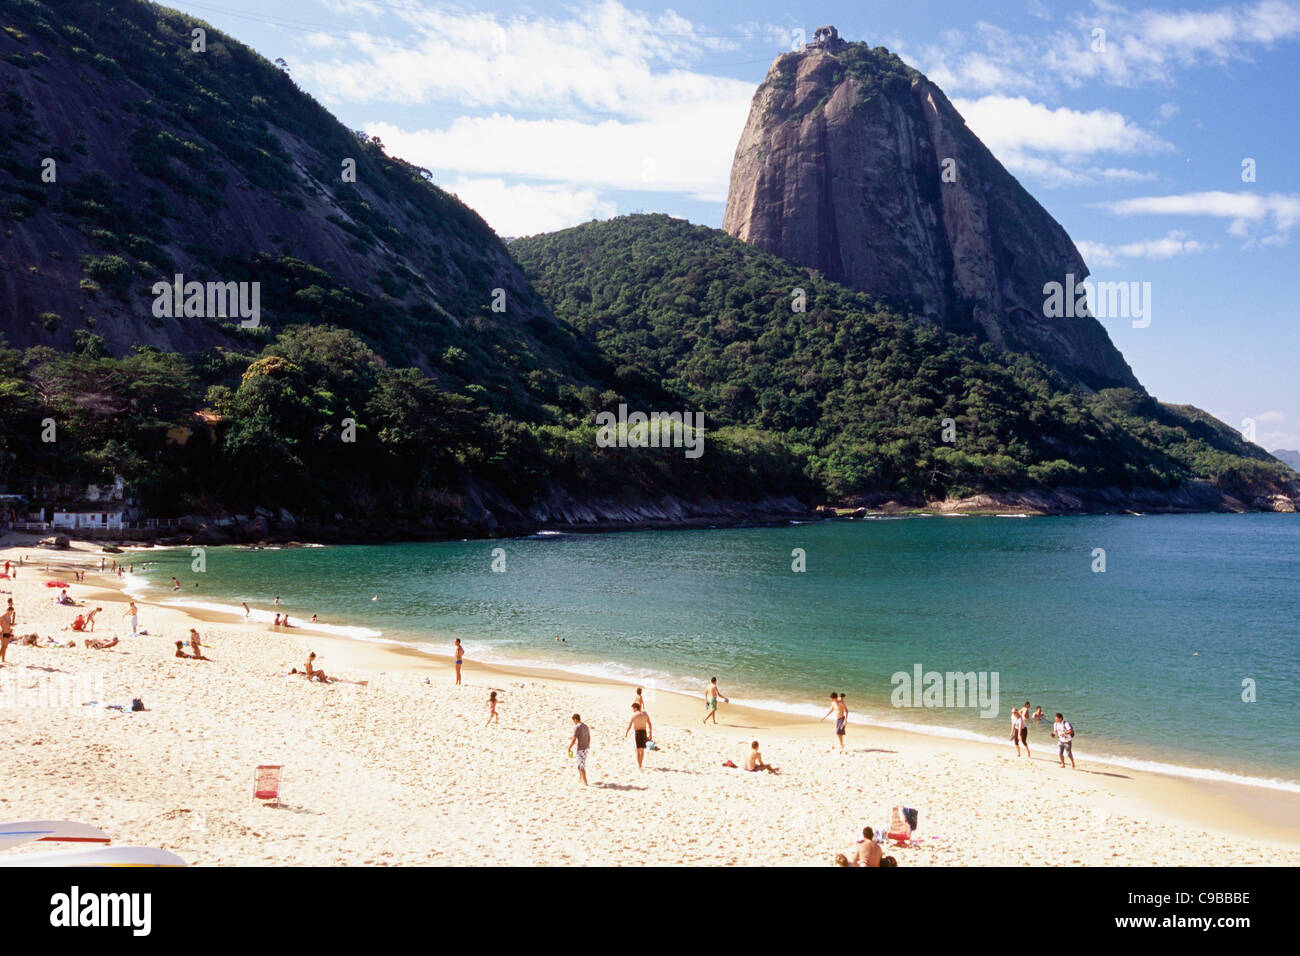 View of the Sugarloaf Mountain from the Vermelha Beach, Rio de Janeiro, Brazil Stock Photo